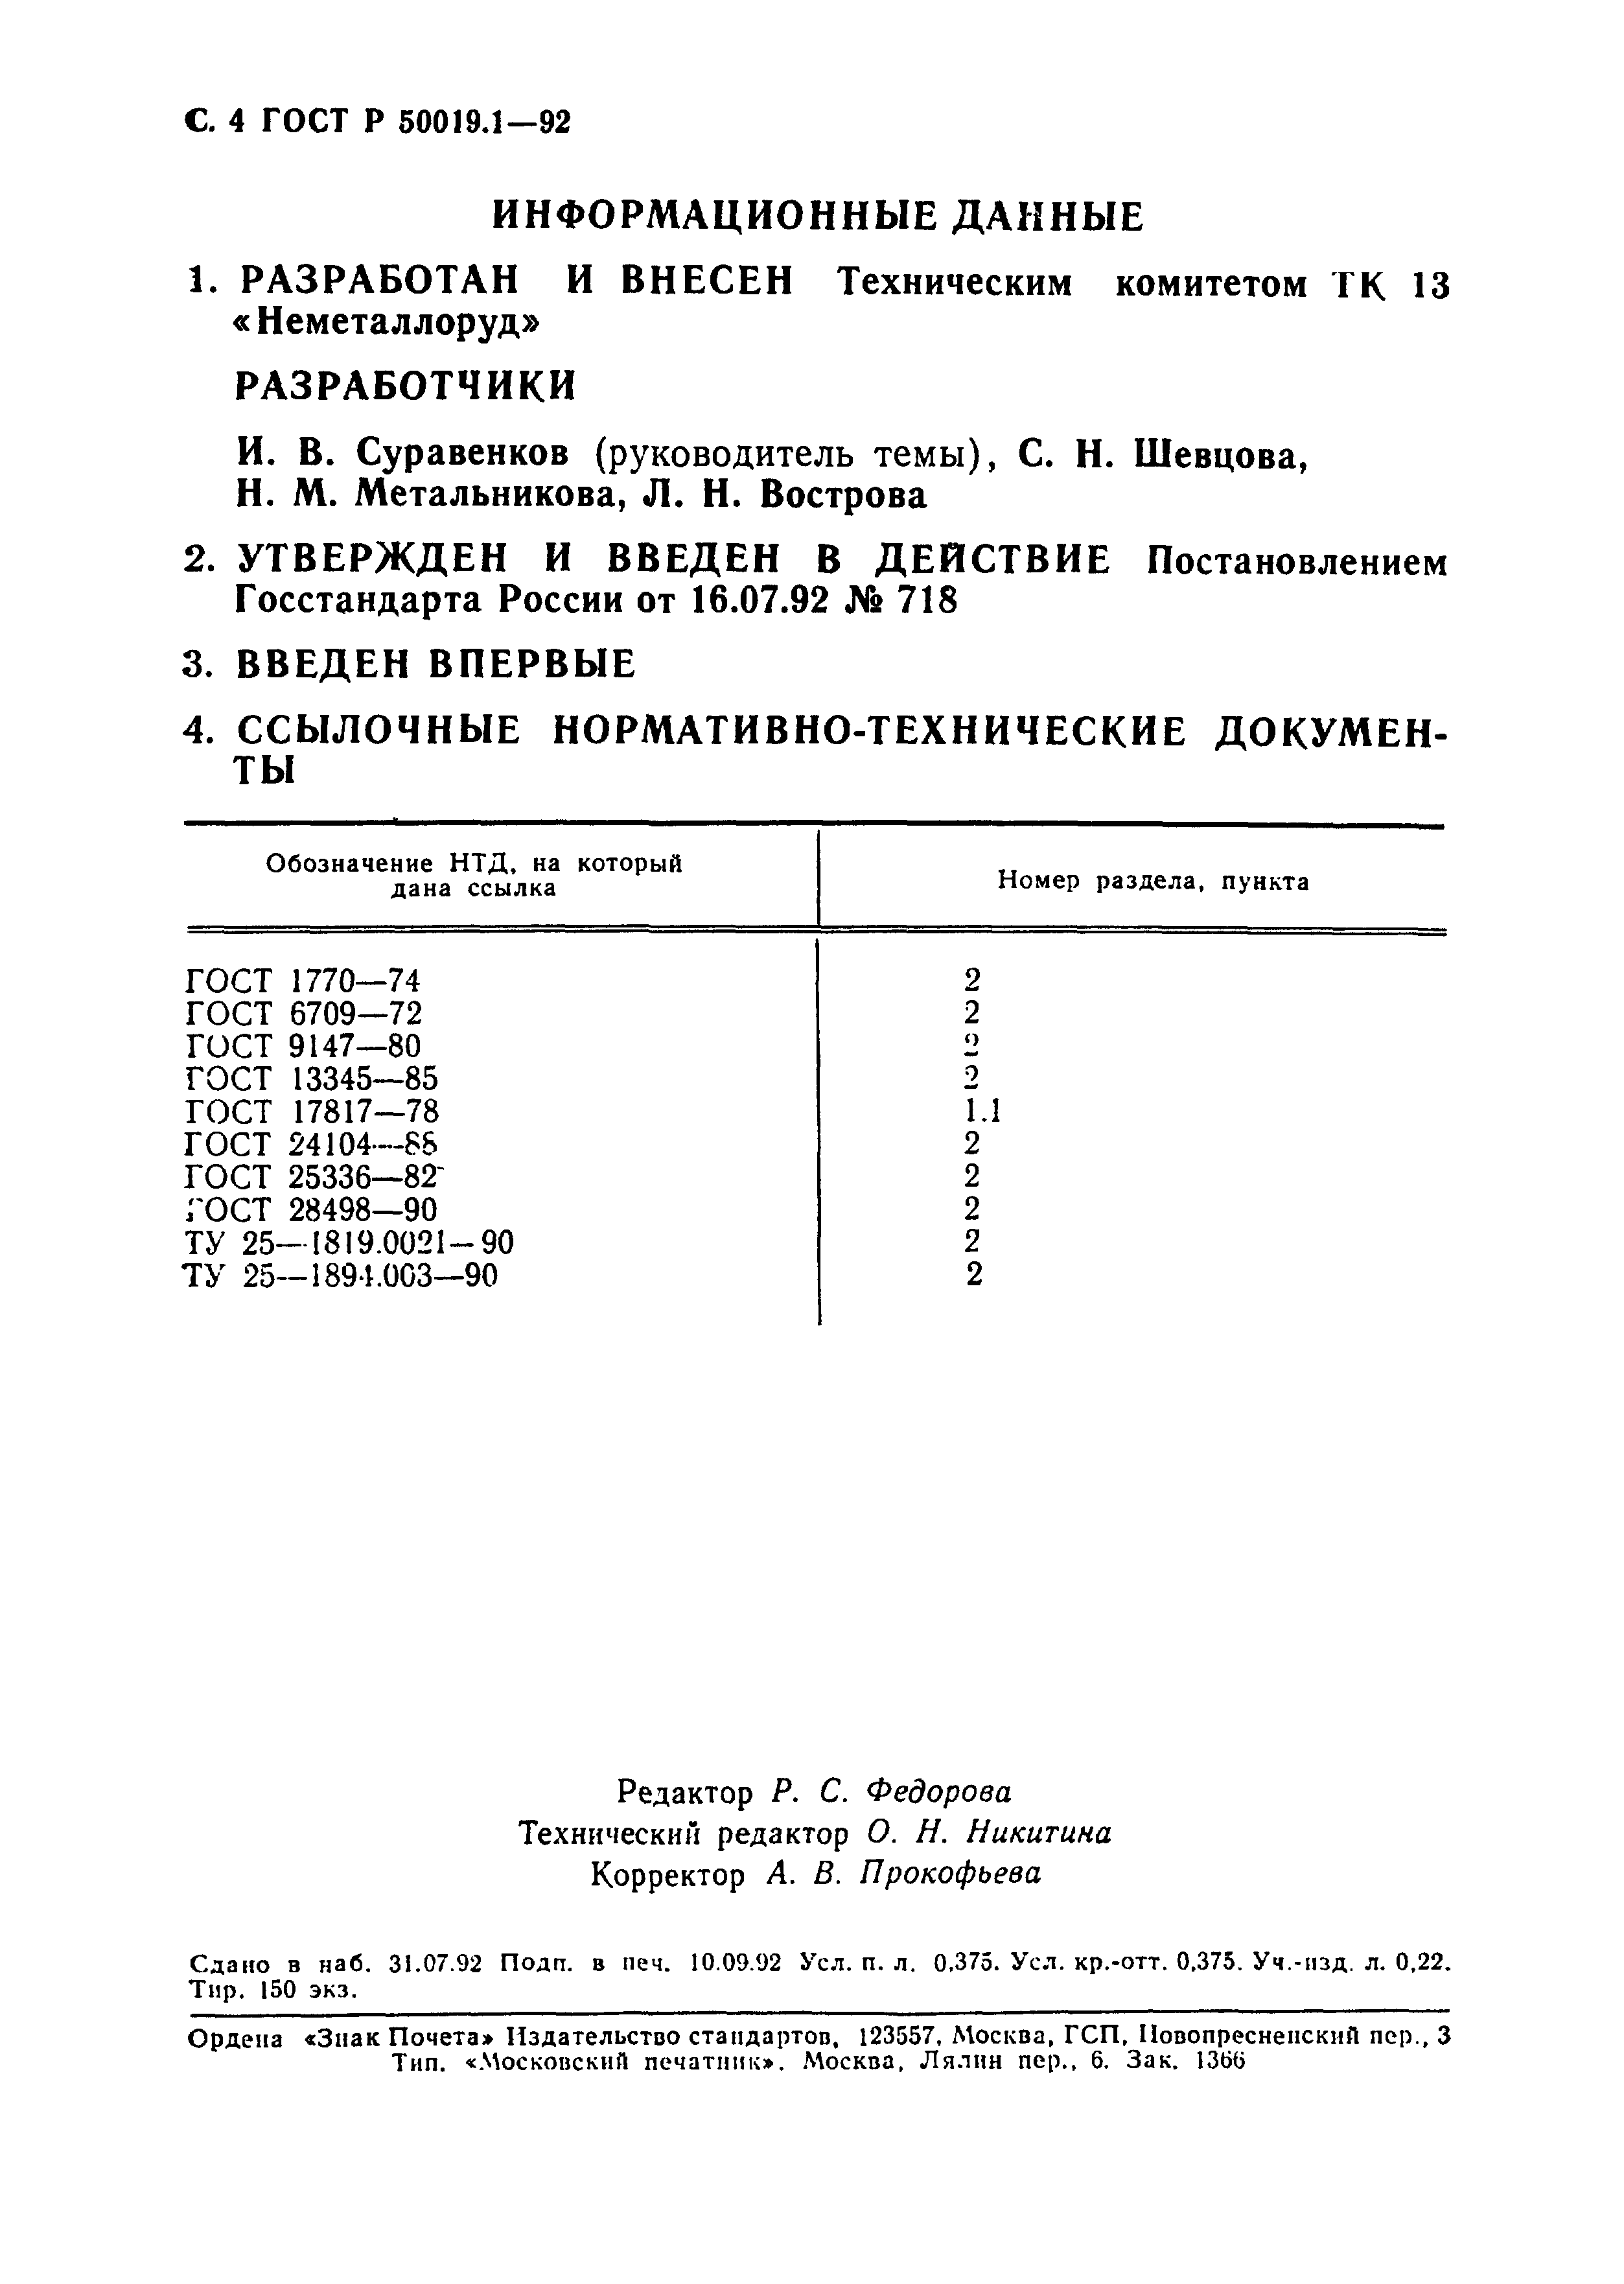 ГОСТ Р 50019.1-92